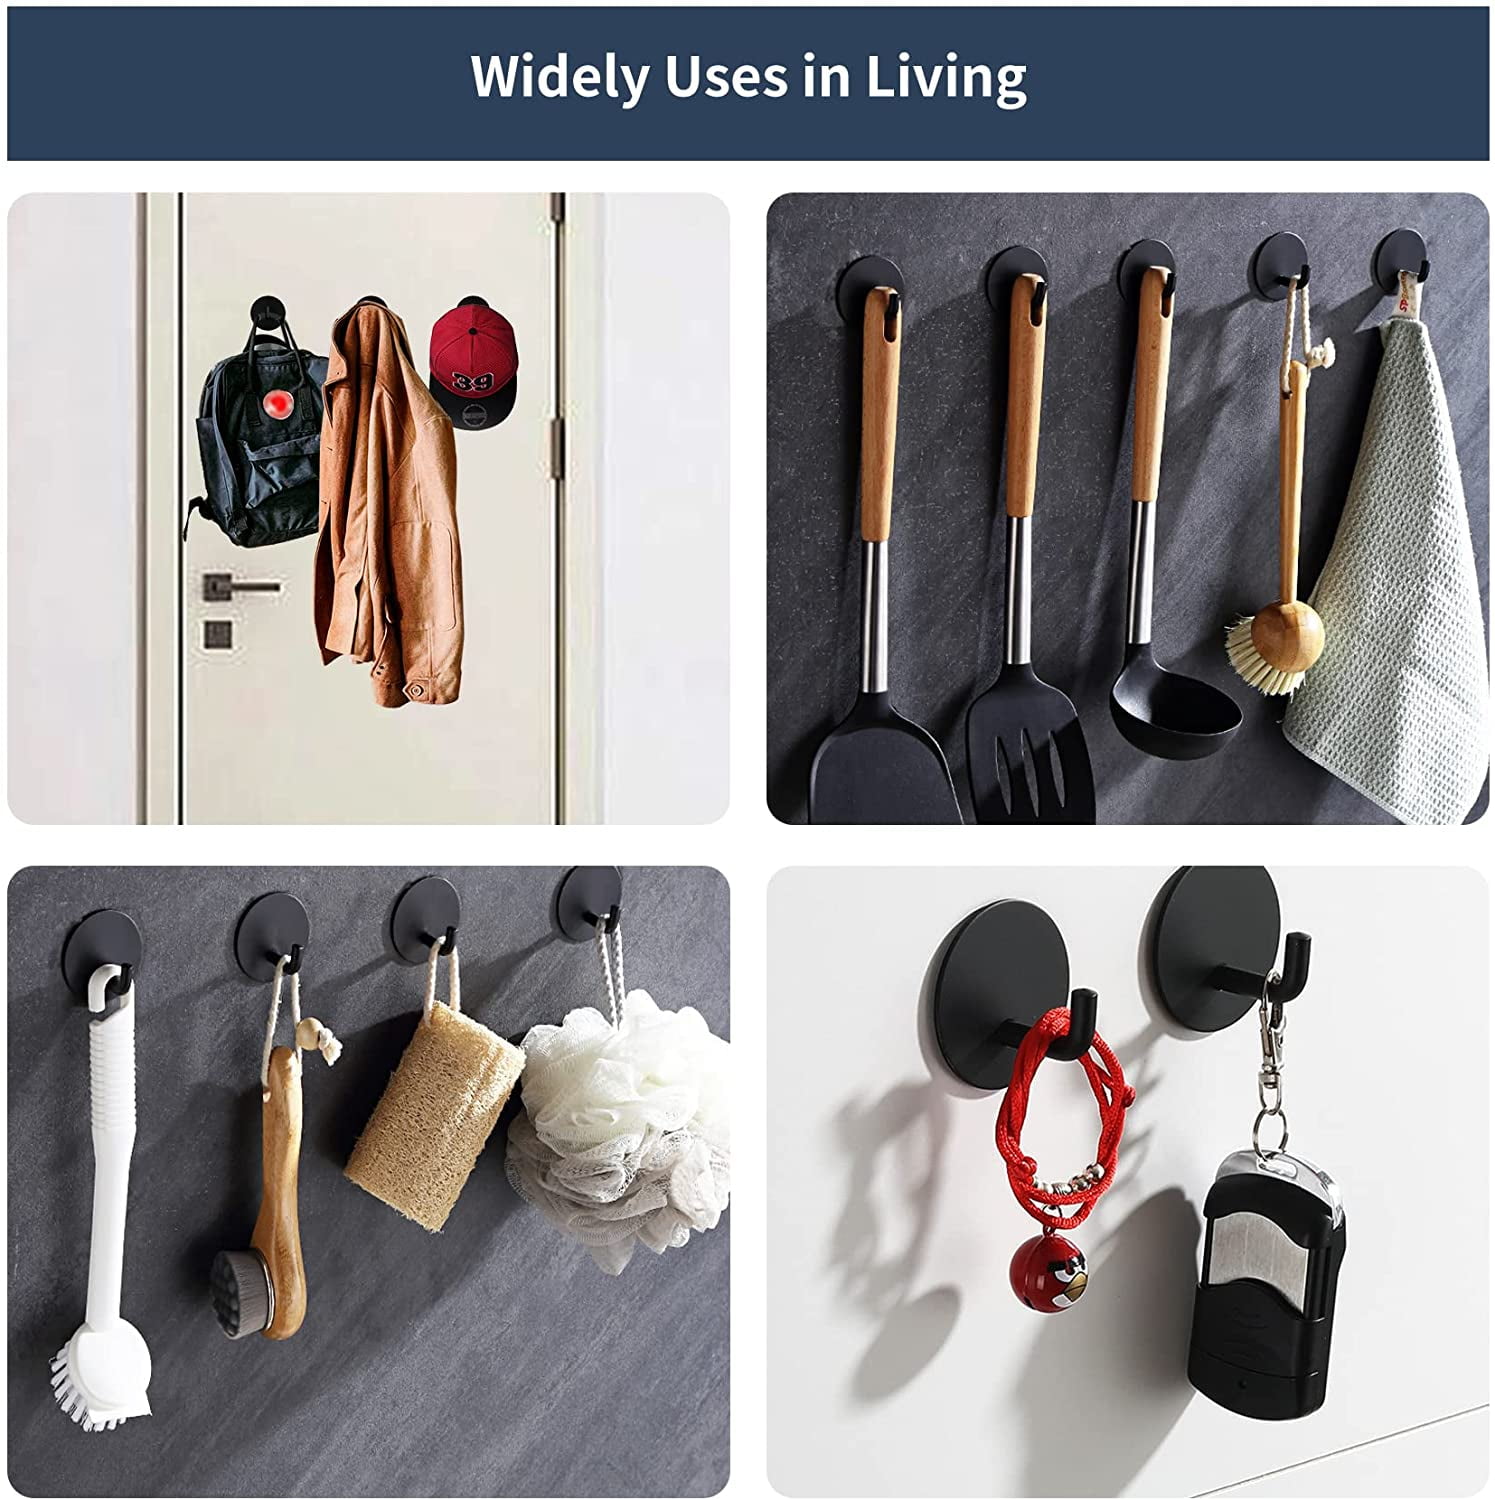 Tickjoy Adhesive Hooks 10 Pack - Heavy Duty Towel Hooks for Bathrooms, Waterproof Shower Hooks for Inside Shower Bathroom Bedroom Kitchen (Silver